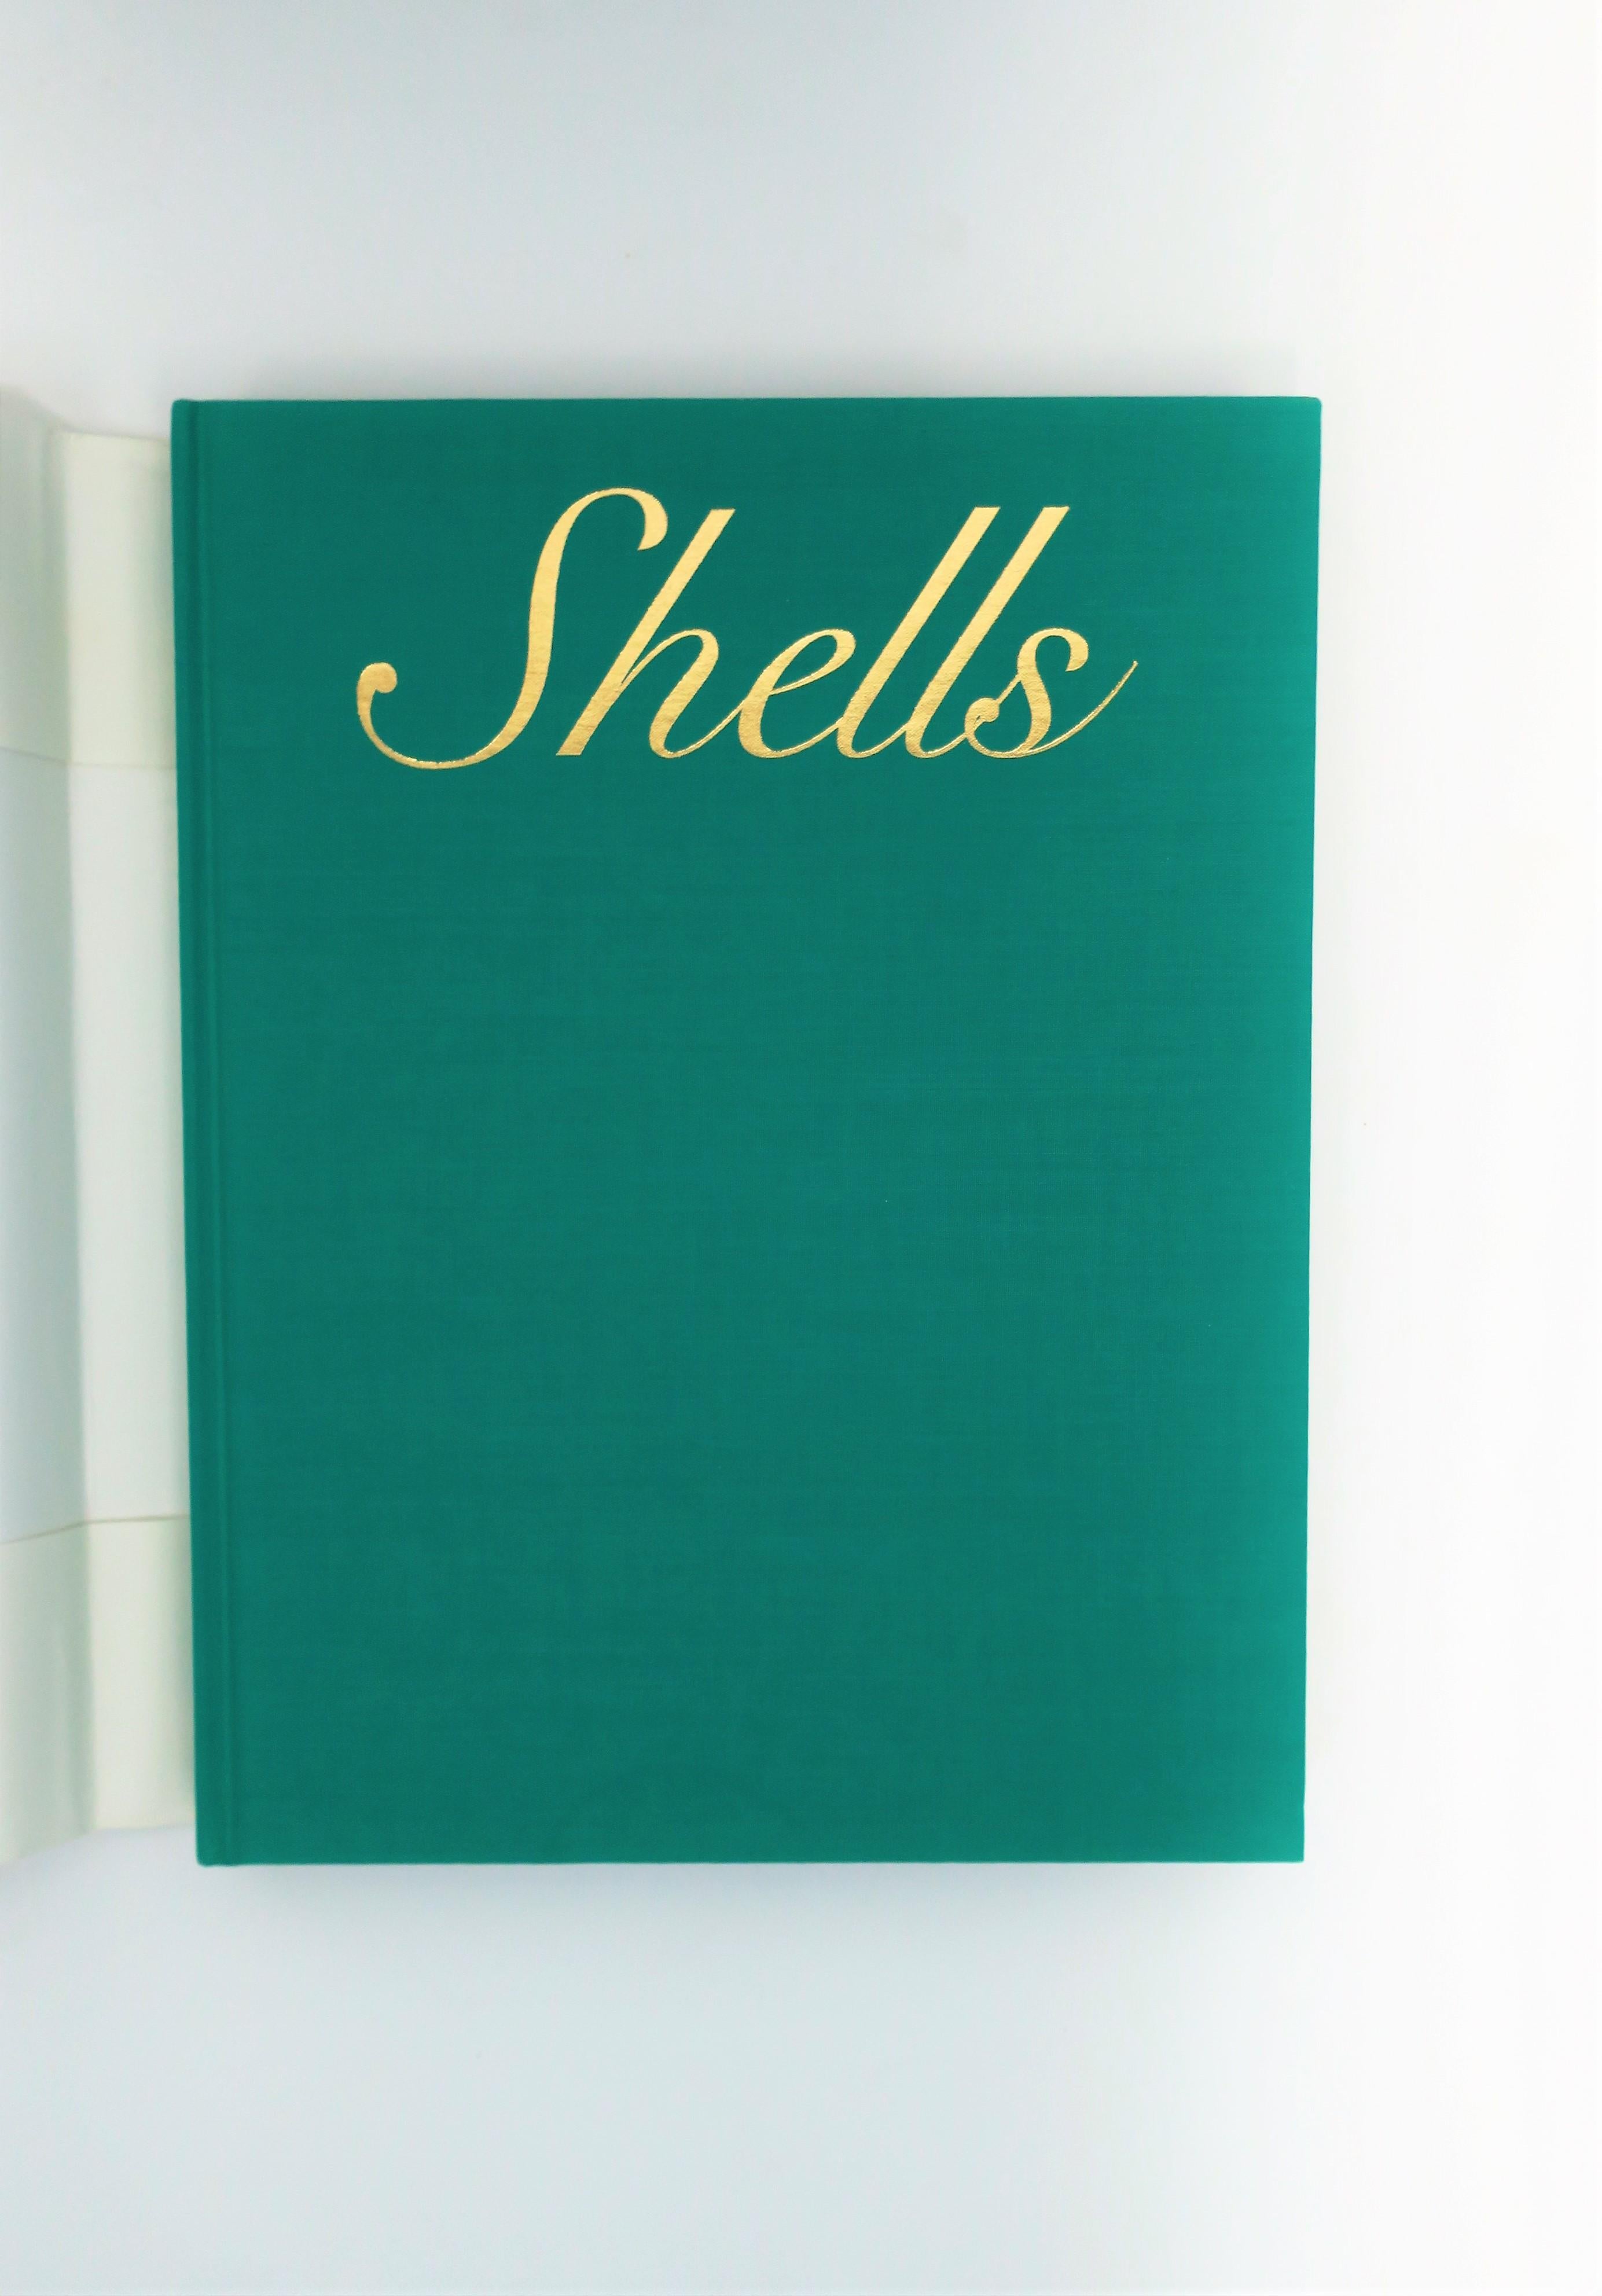 sea shell books